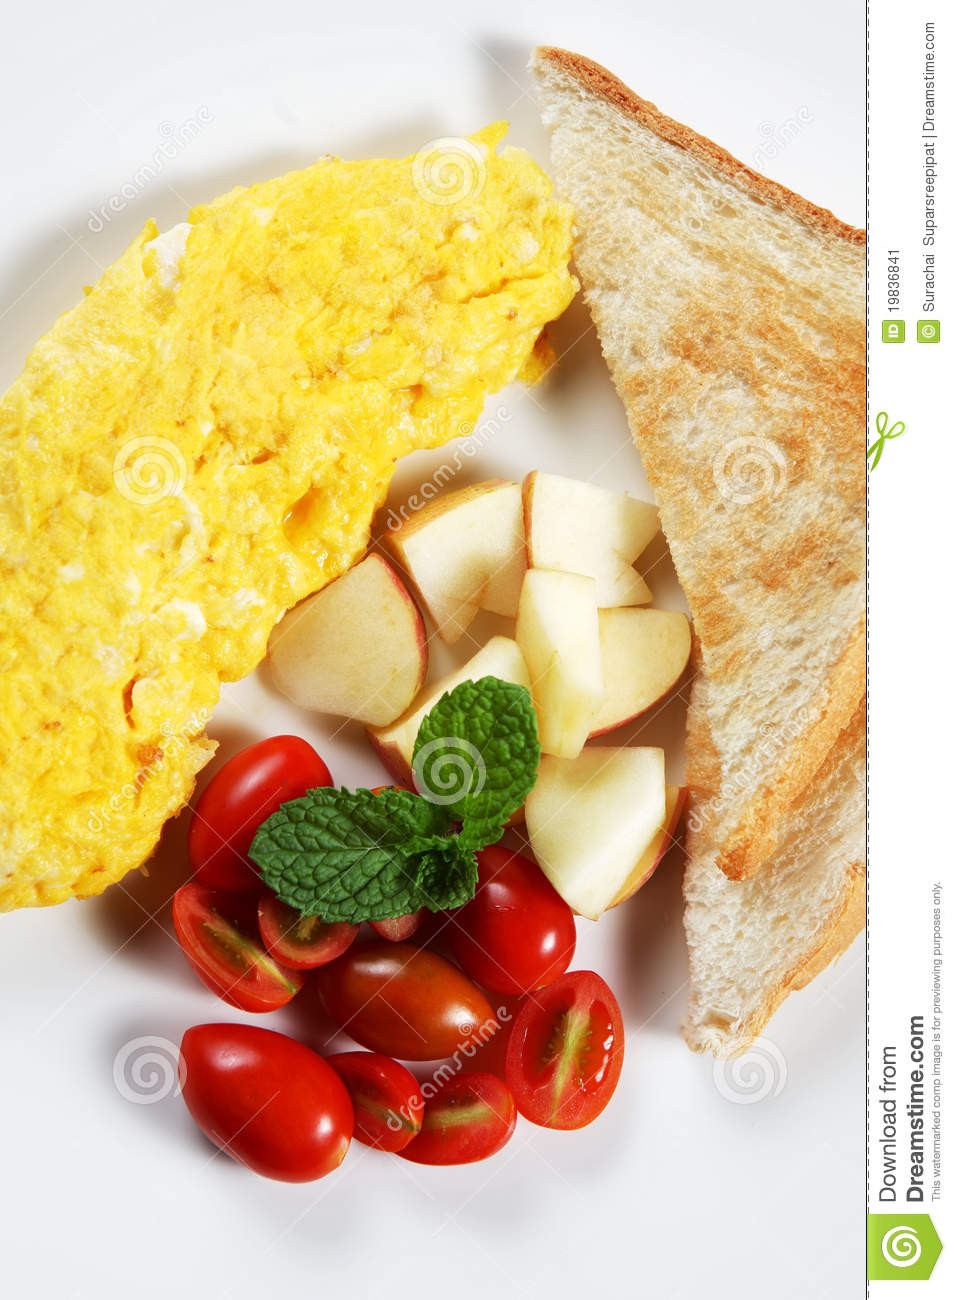 Healthy Low Fat Breakfast
 Healthy Low fat Breakfast 03 Stock Image Image